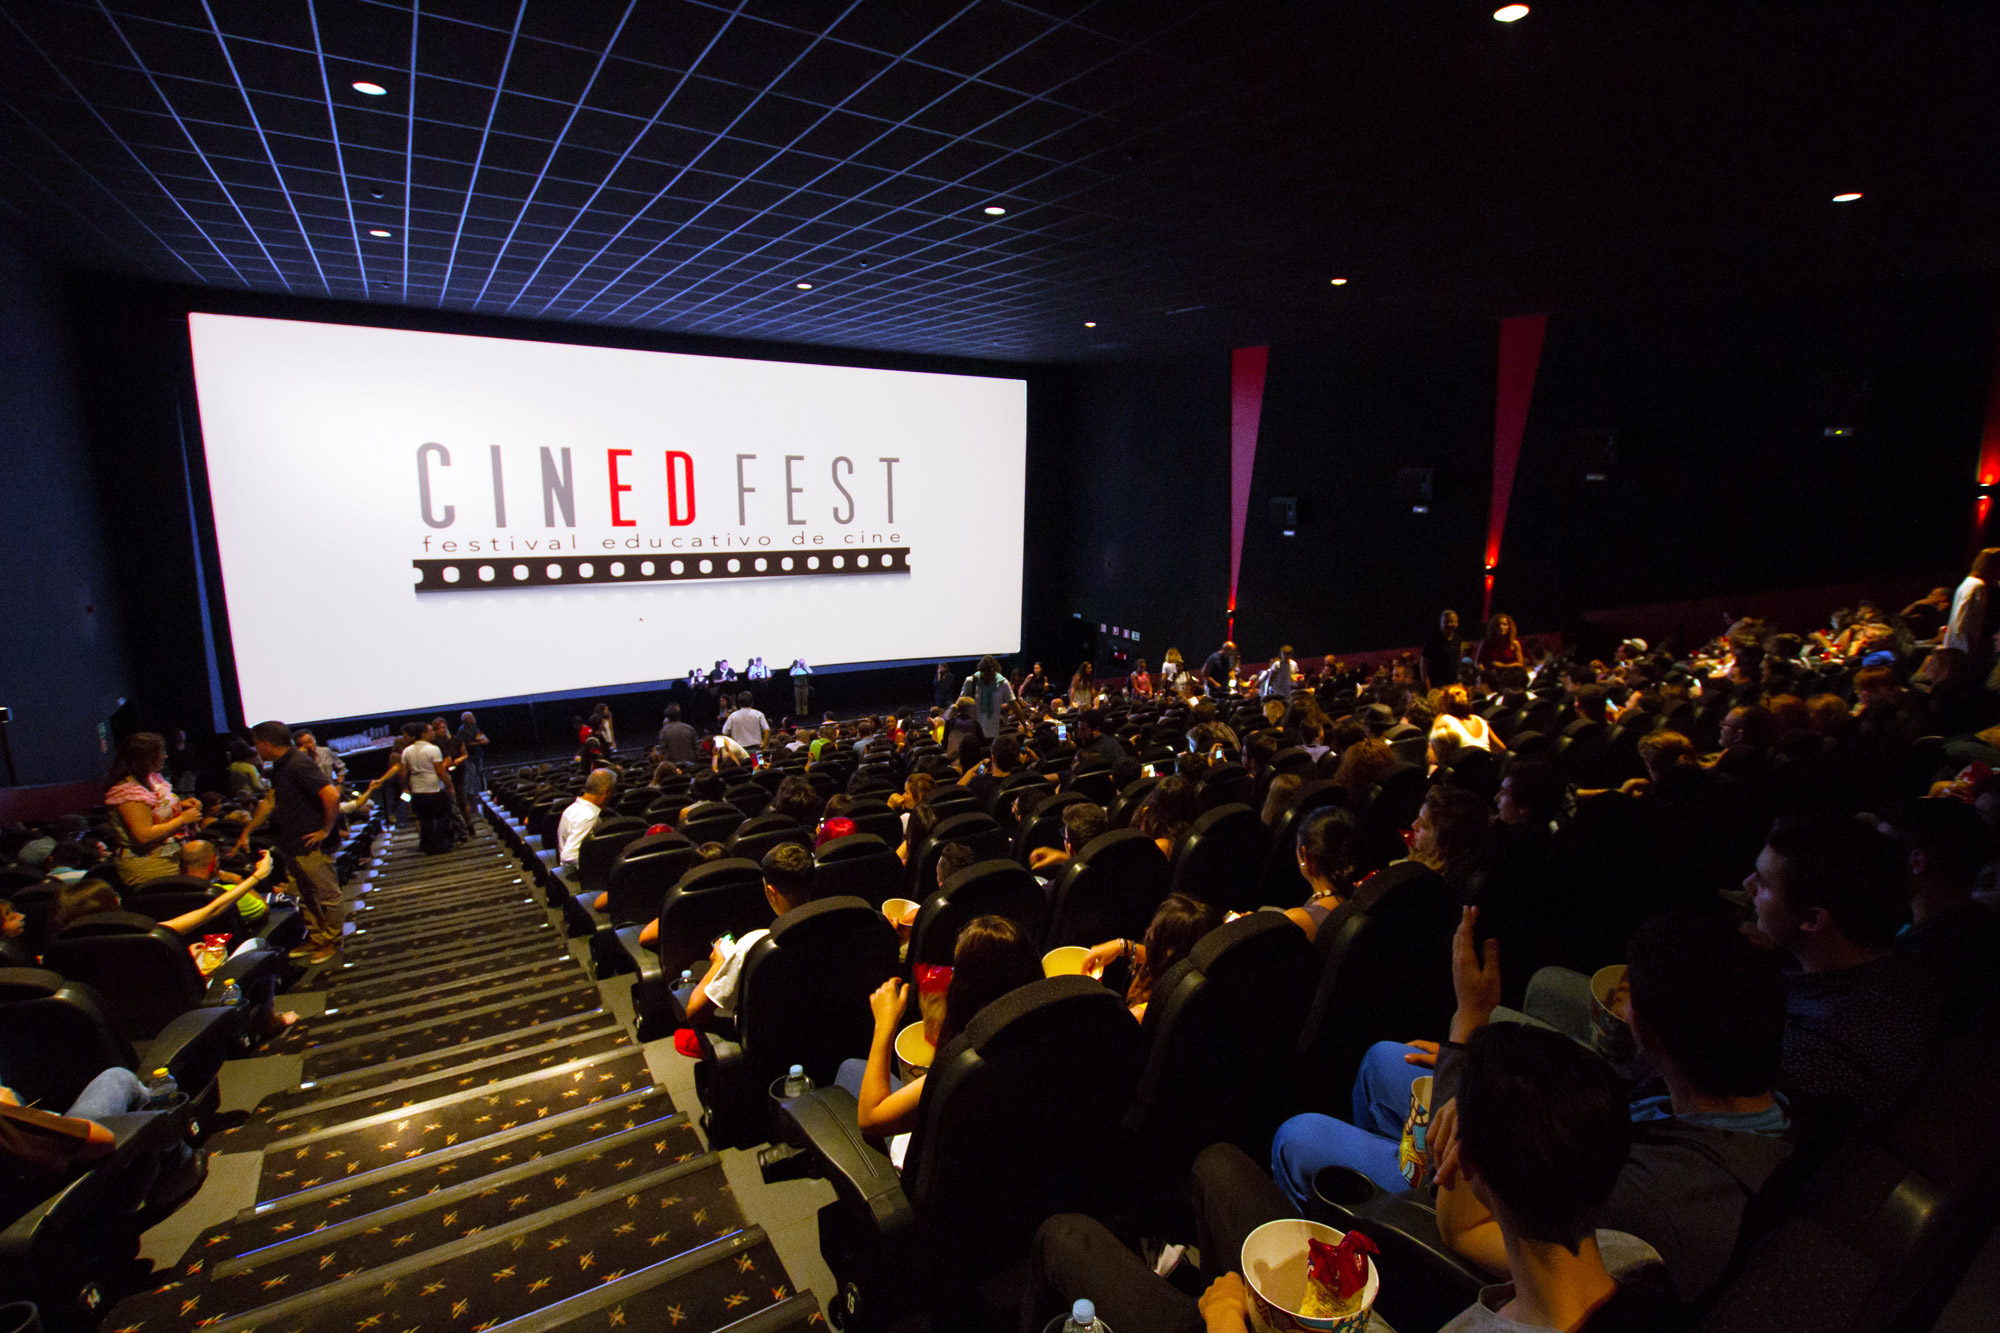 Cinedfest